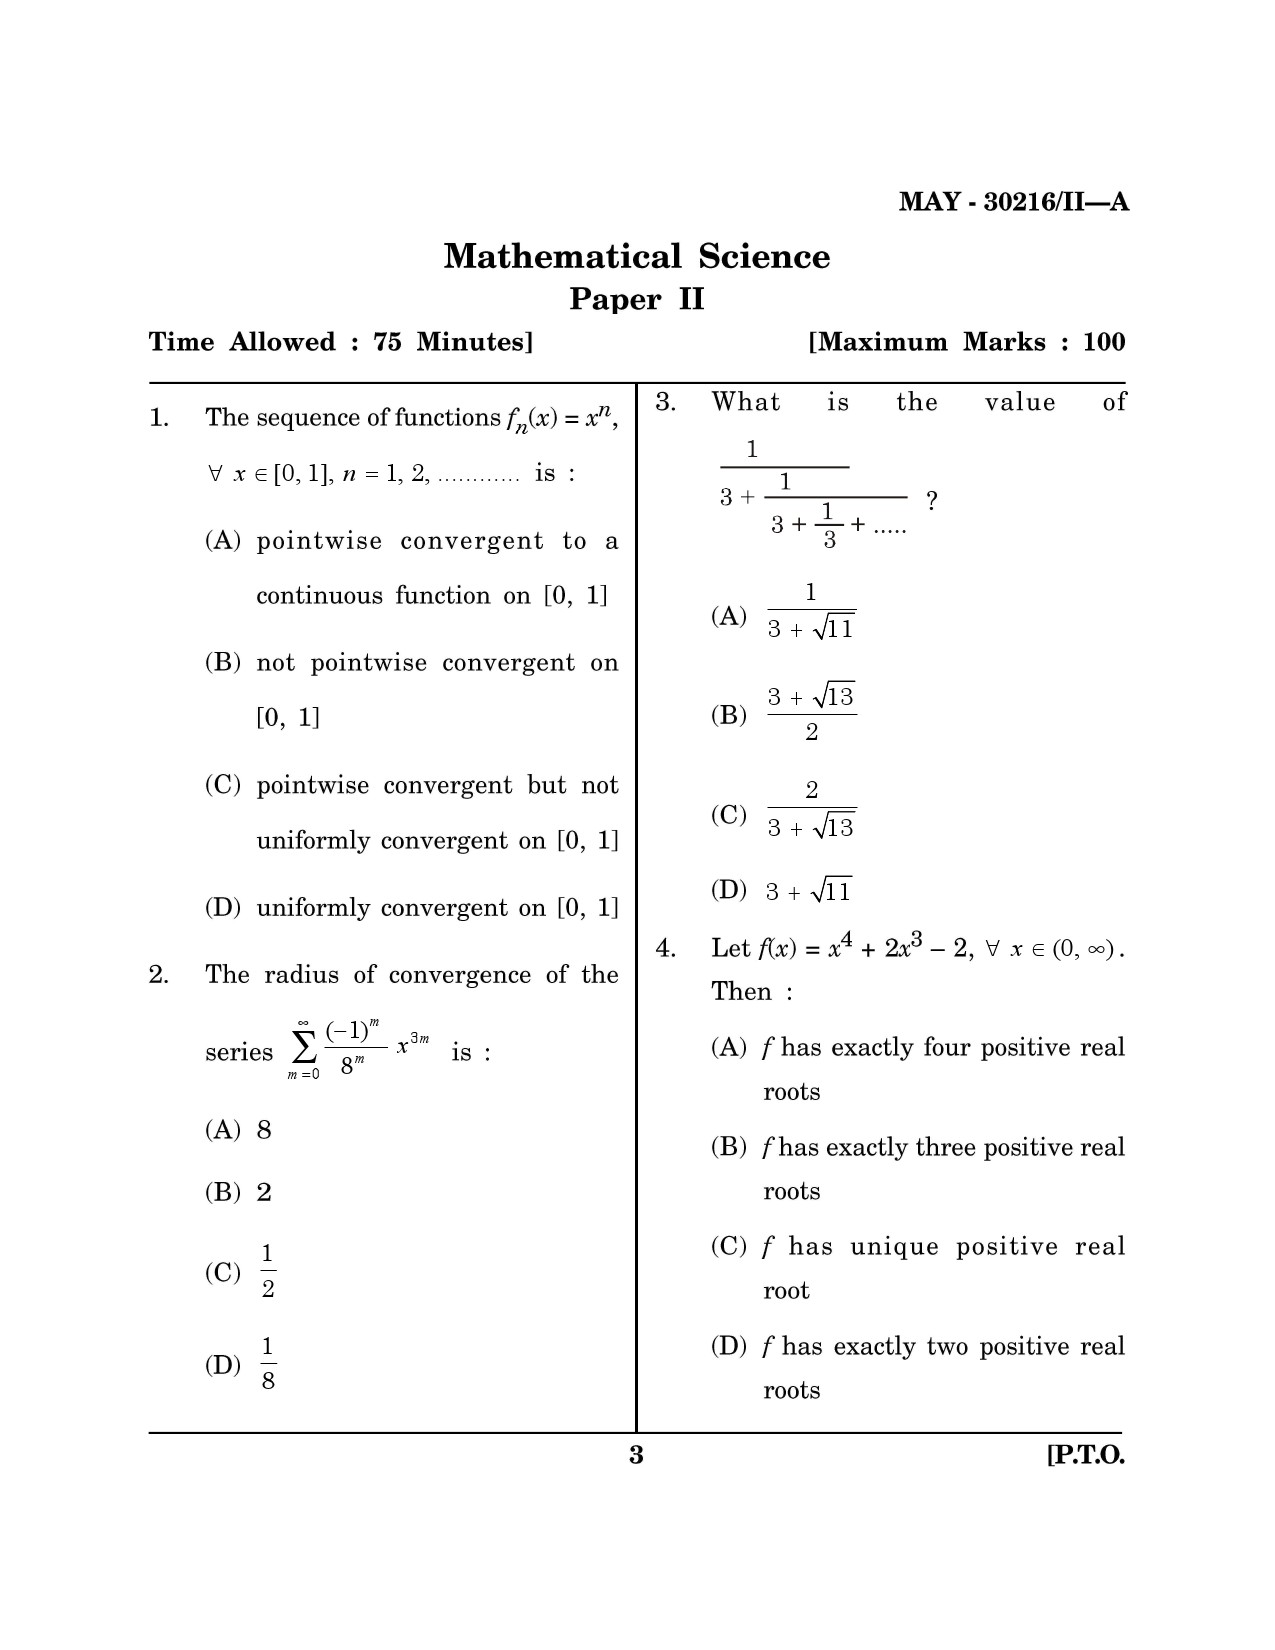 Maharashtra SET Mathematical Sciences Question Paper II May 2016 2